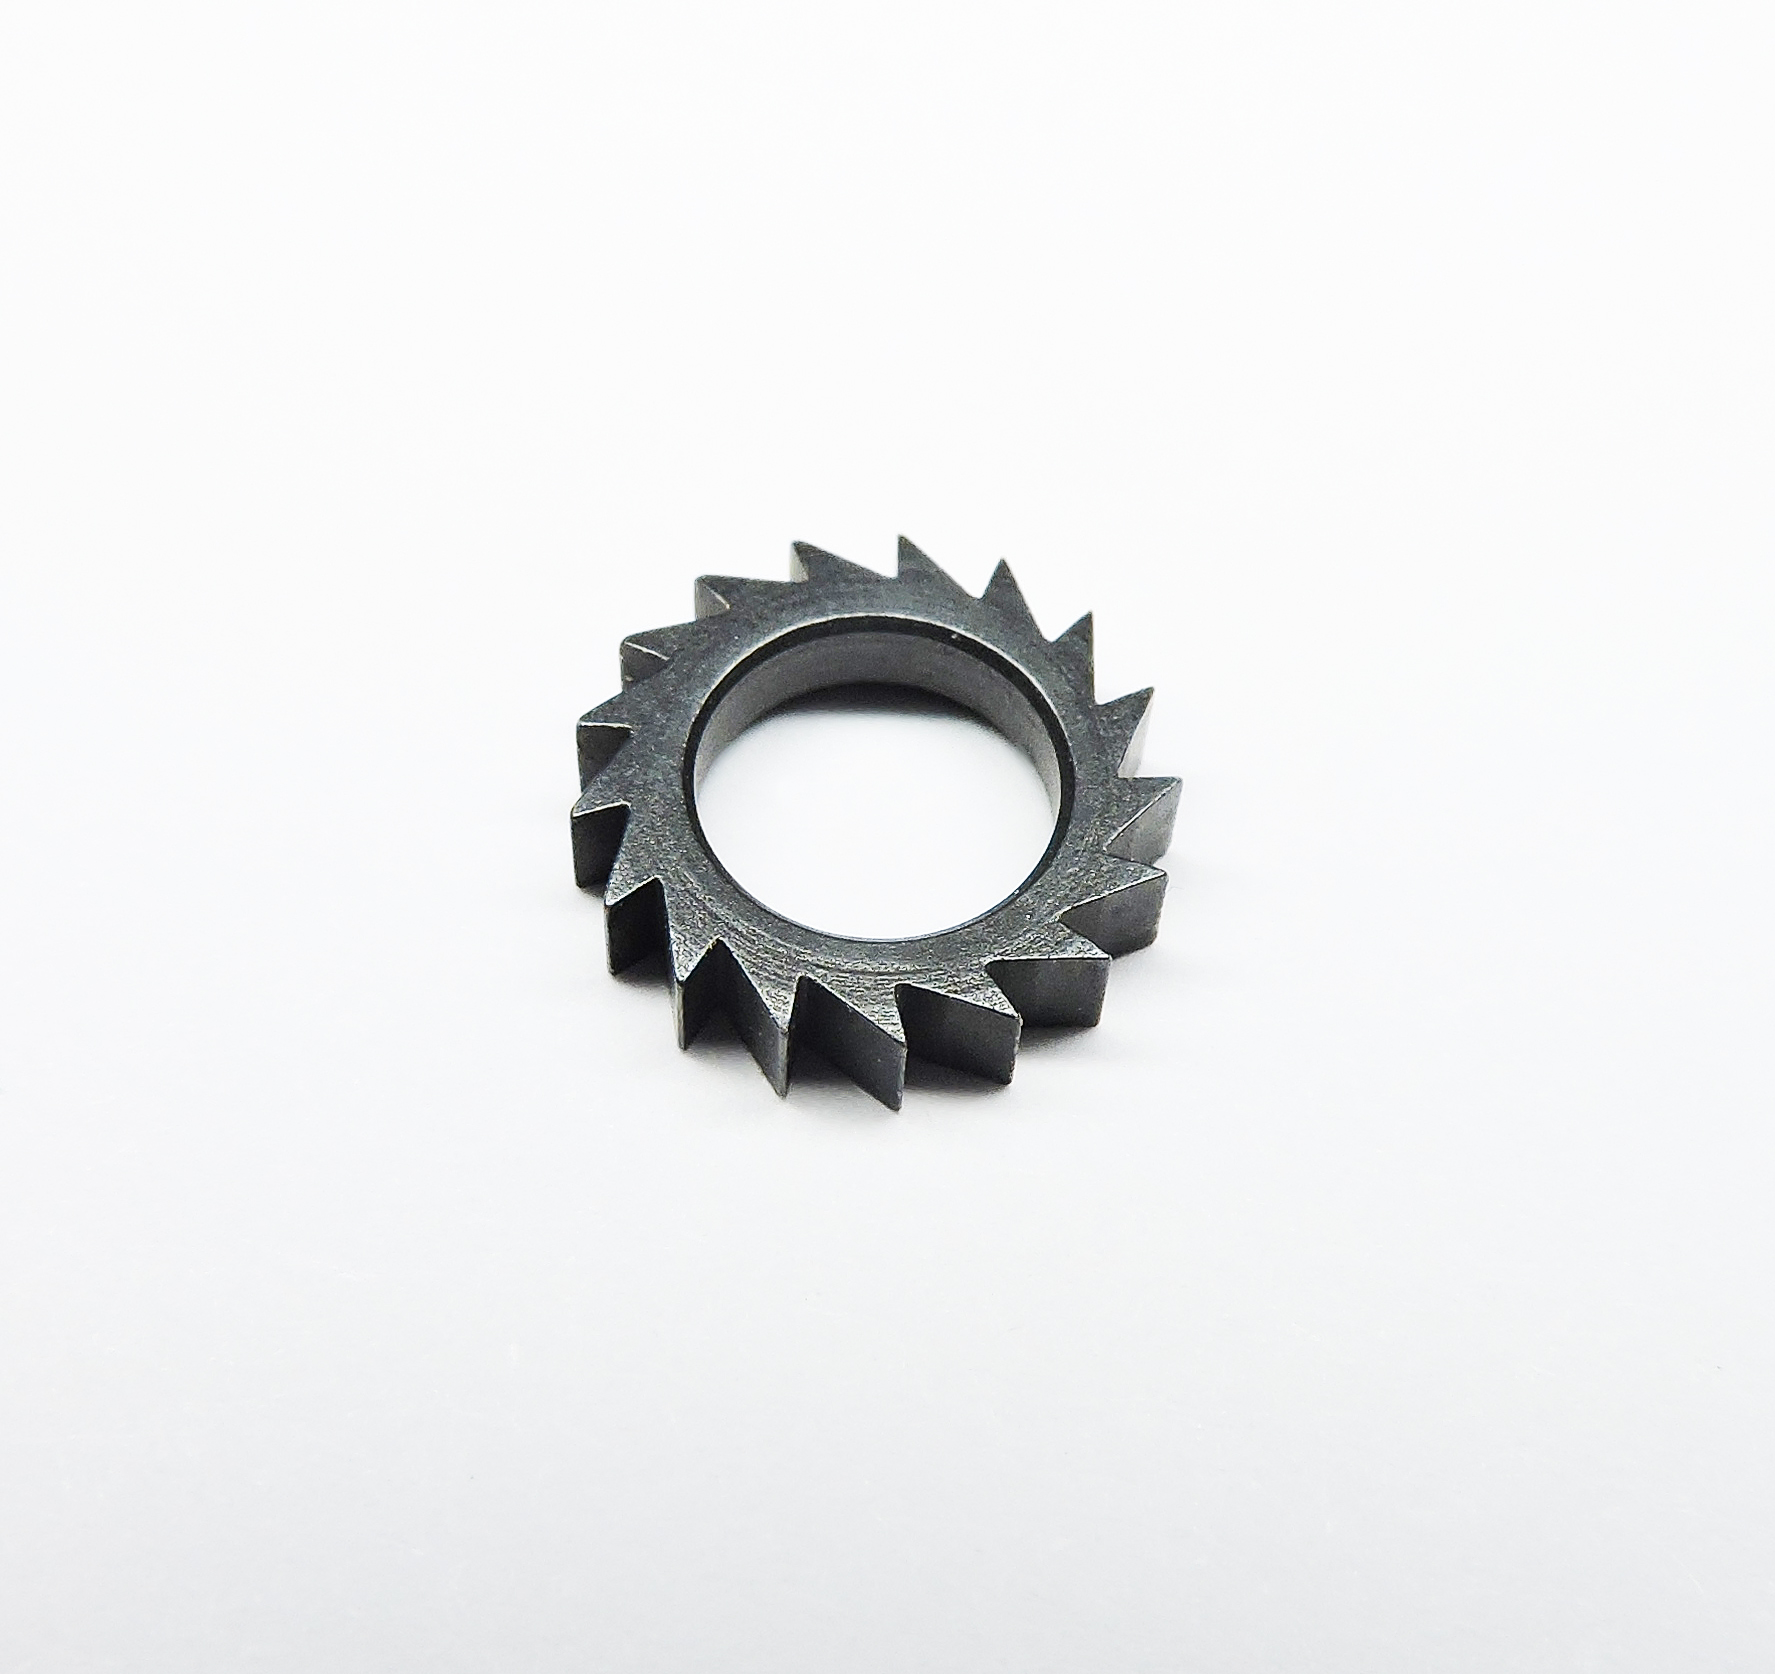 Precision CNC Turned Miniature Steel Automotive Ratchet Gear